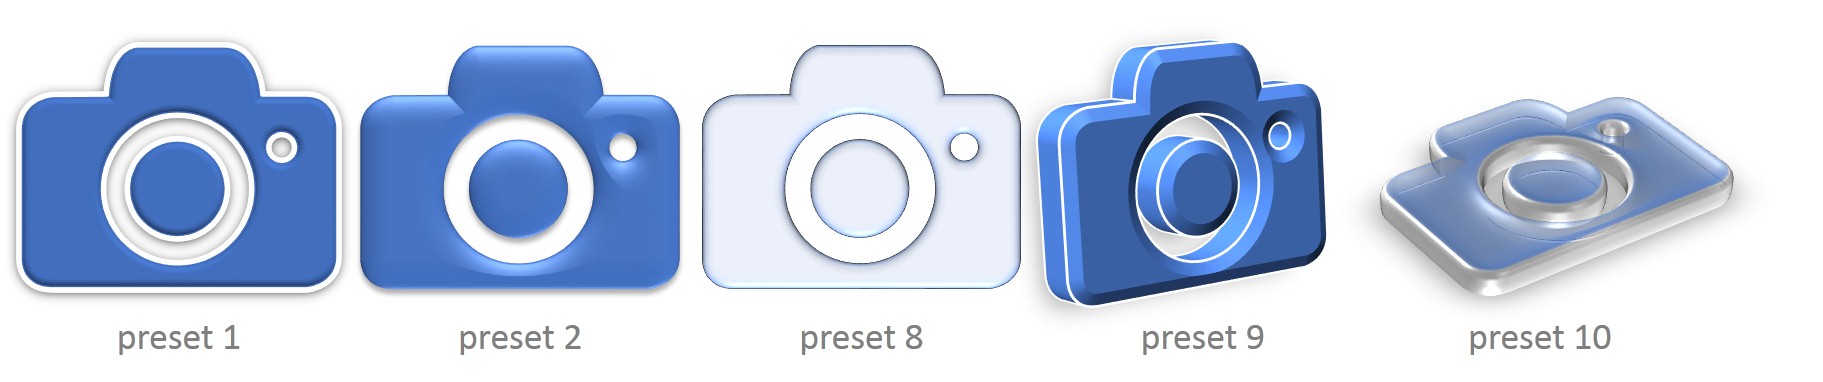 youpresent.co.uk - vicons preset types